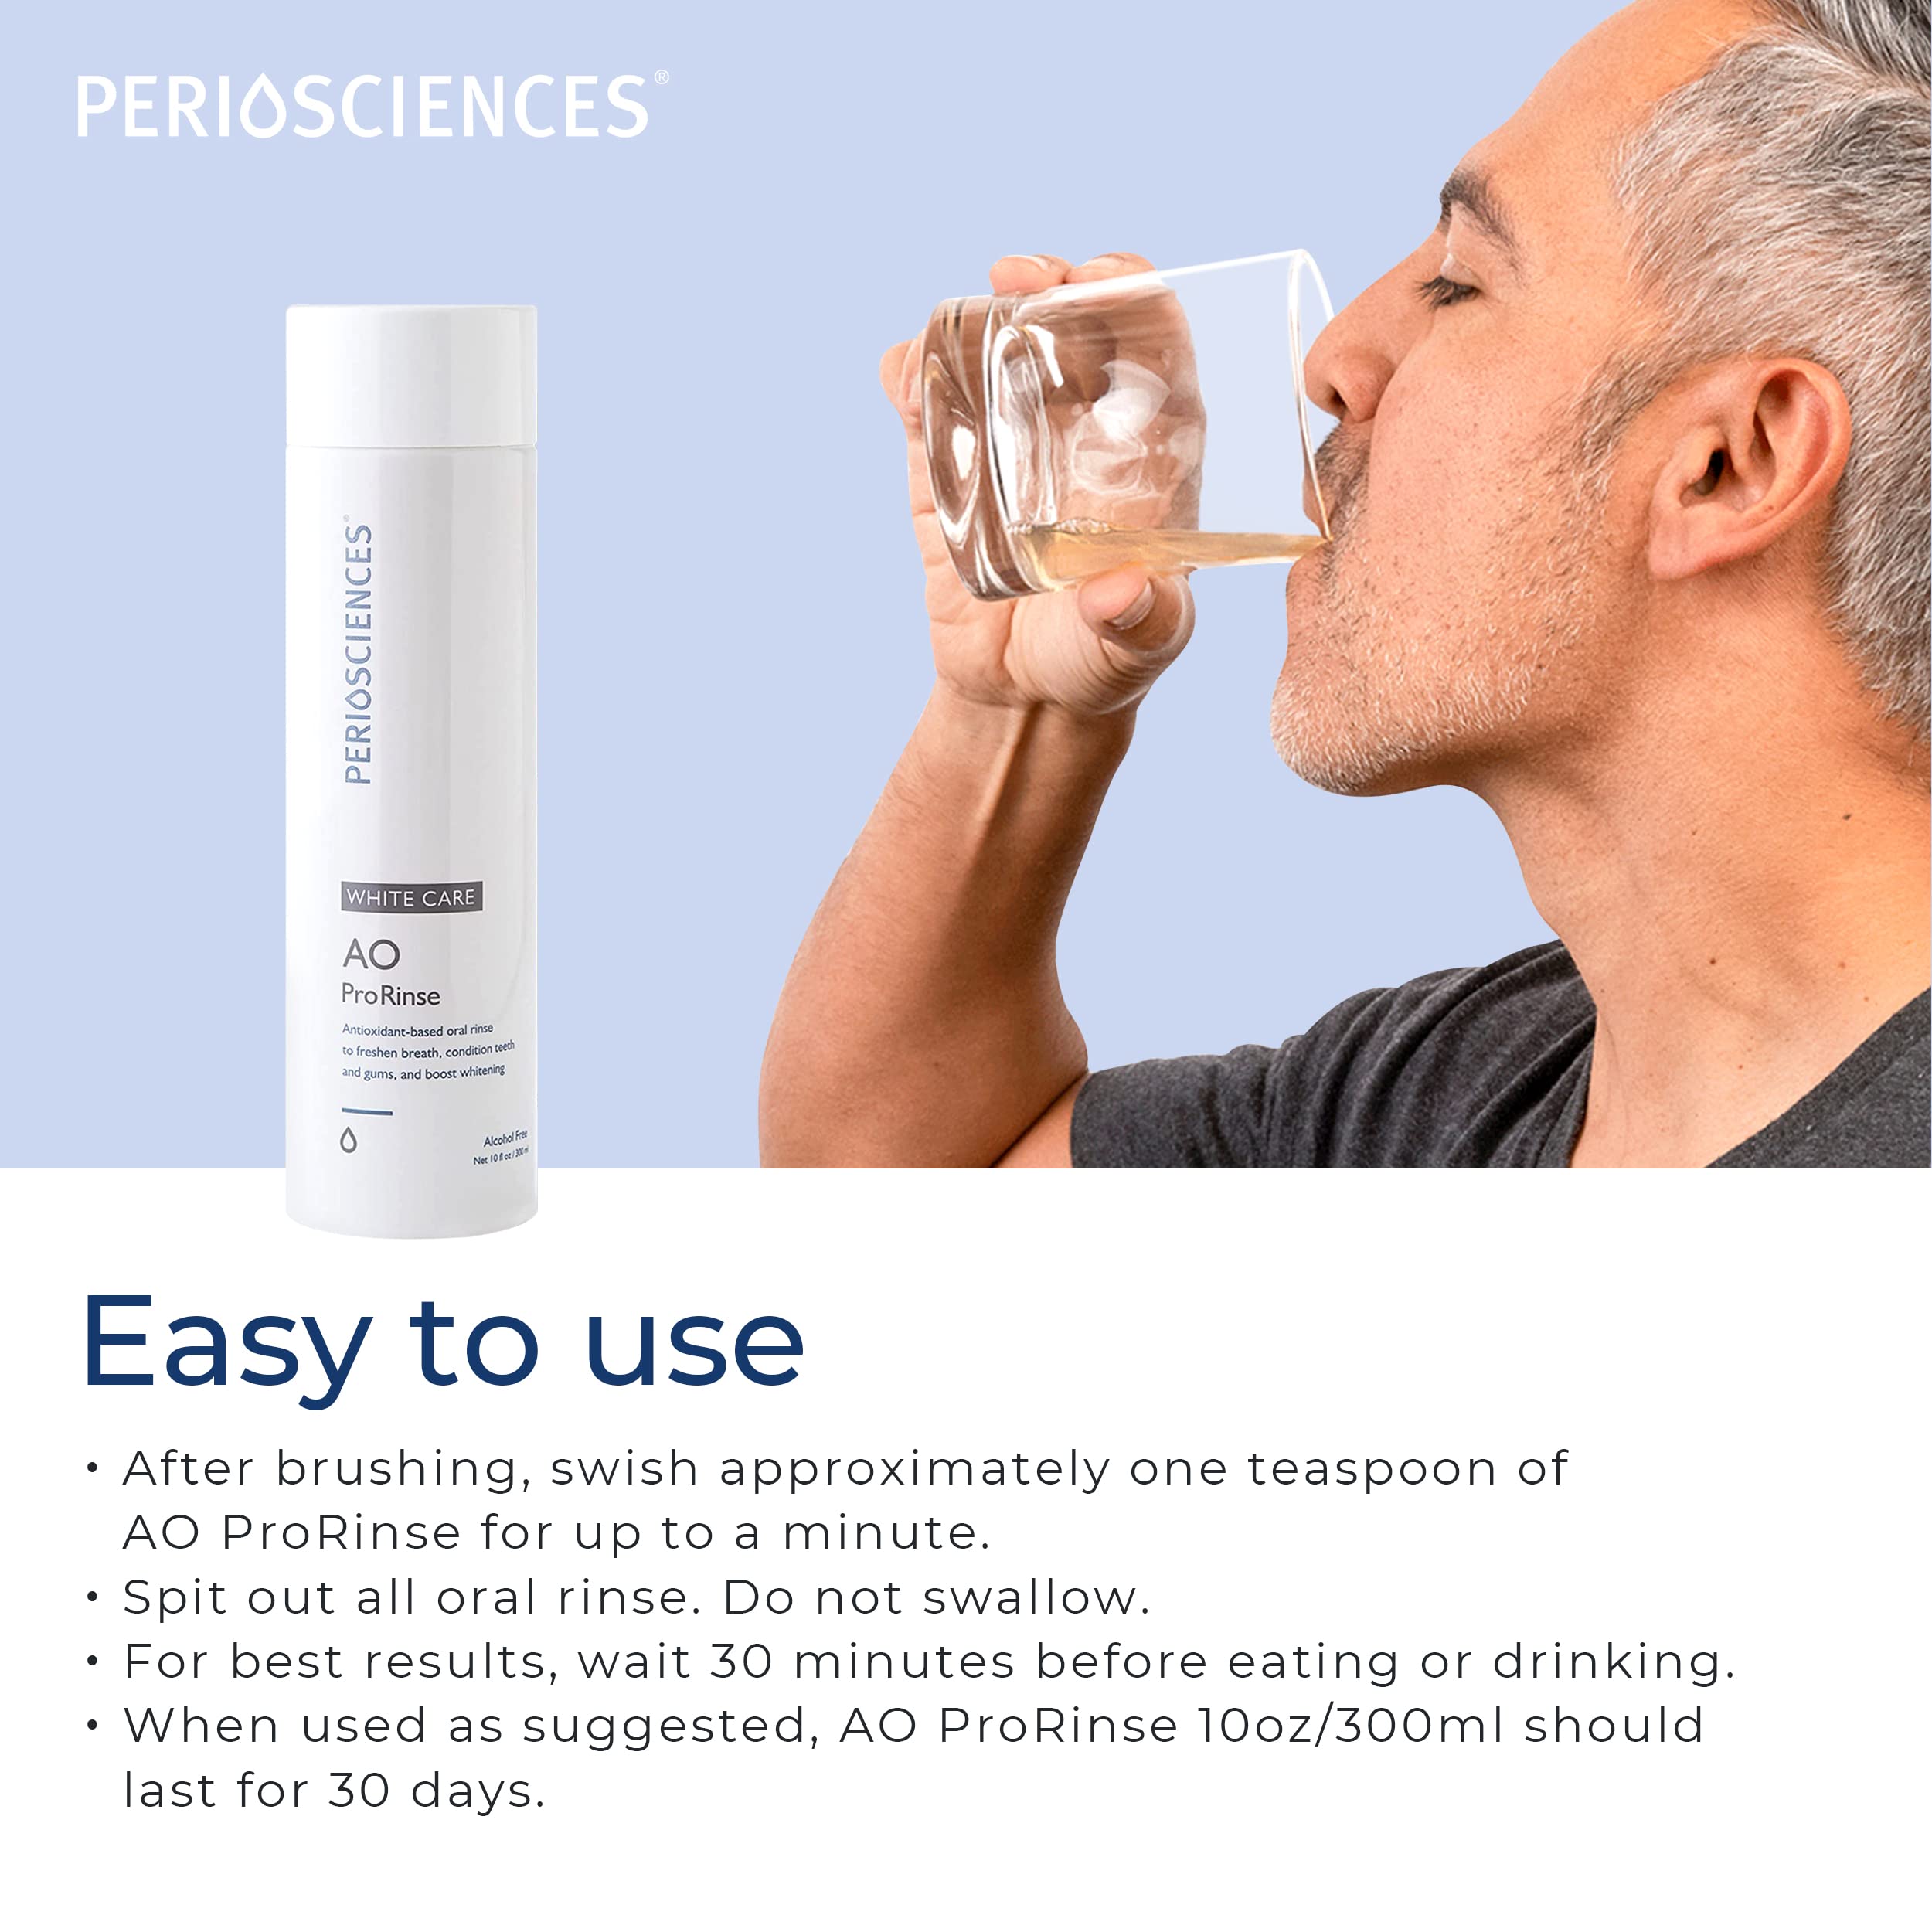 PerioSciences AO ProRinse White Care Whitening Mouthwash with Antioxidants 300ml